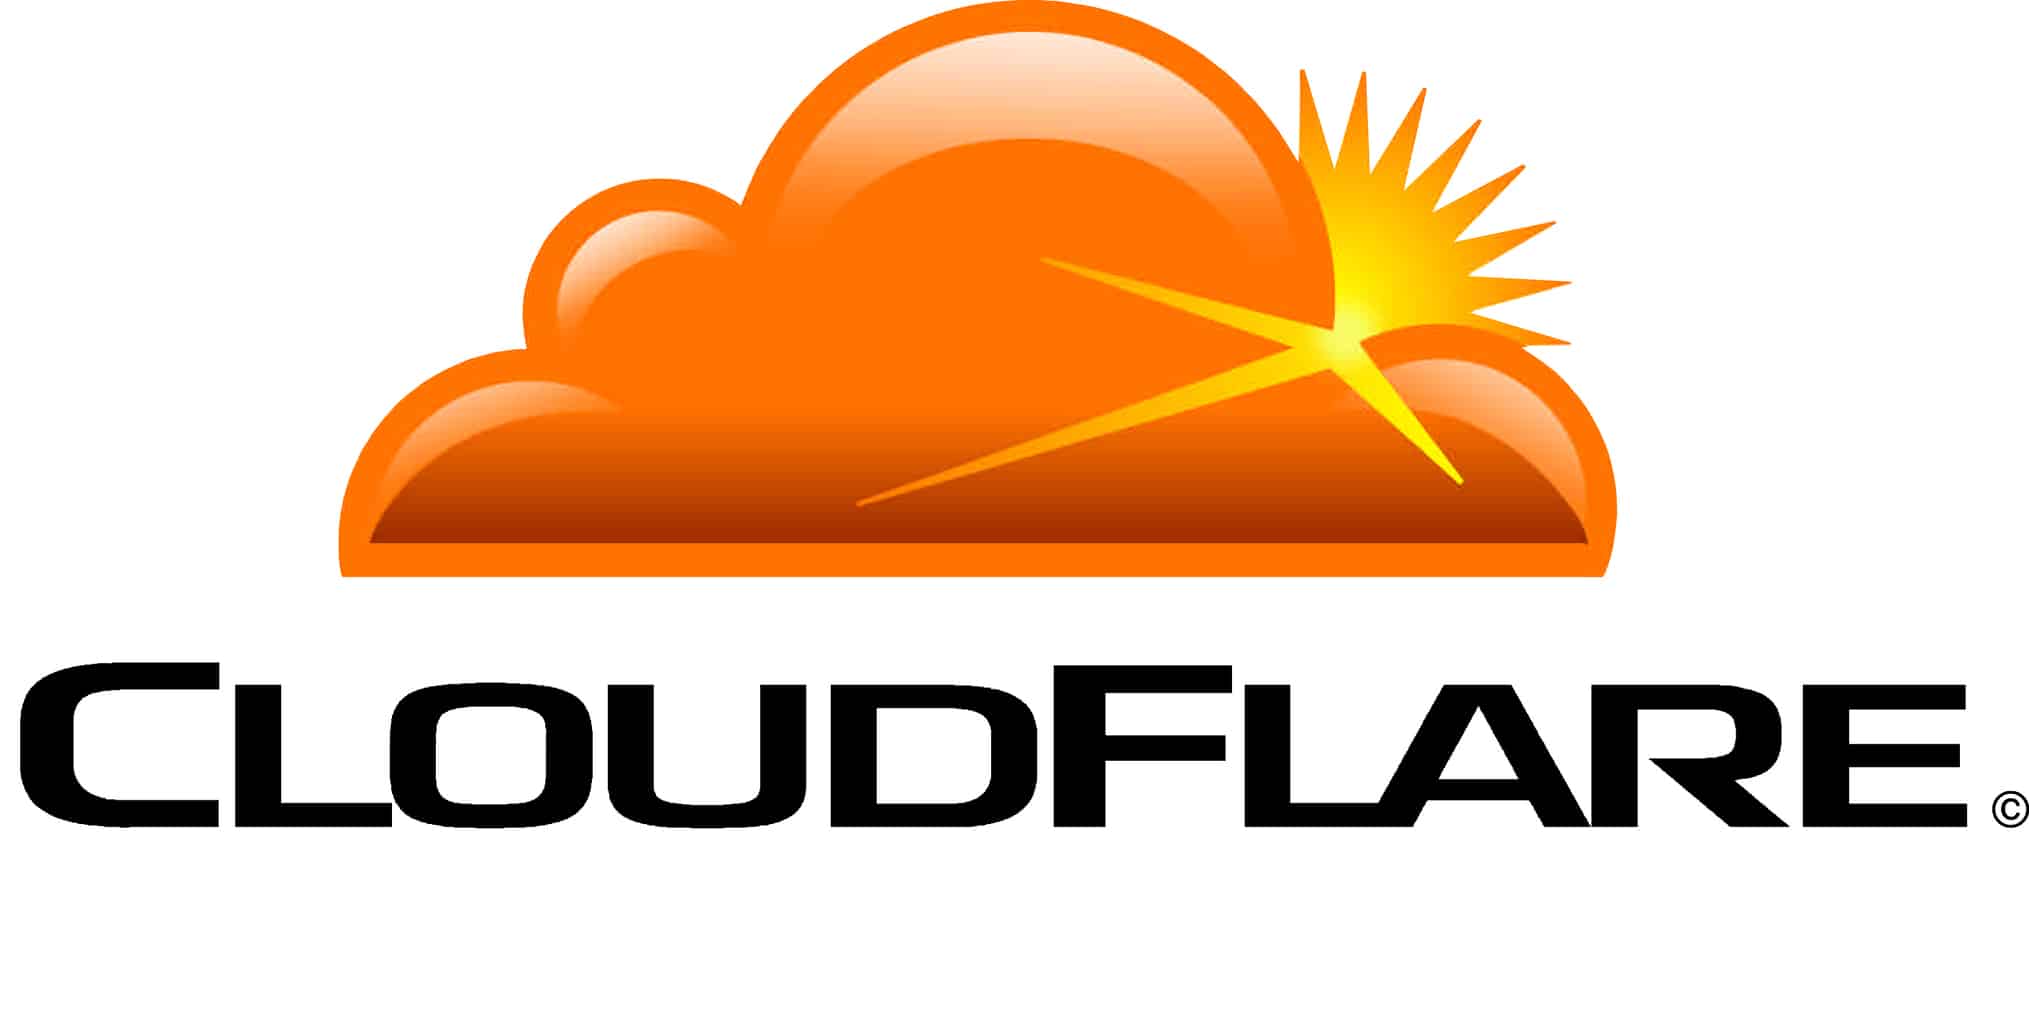 Cloudflare adquire Area 1 Security para reforçar segurança na nuvem